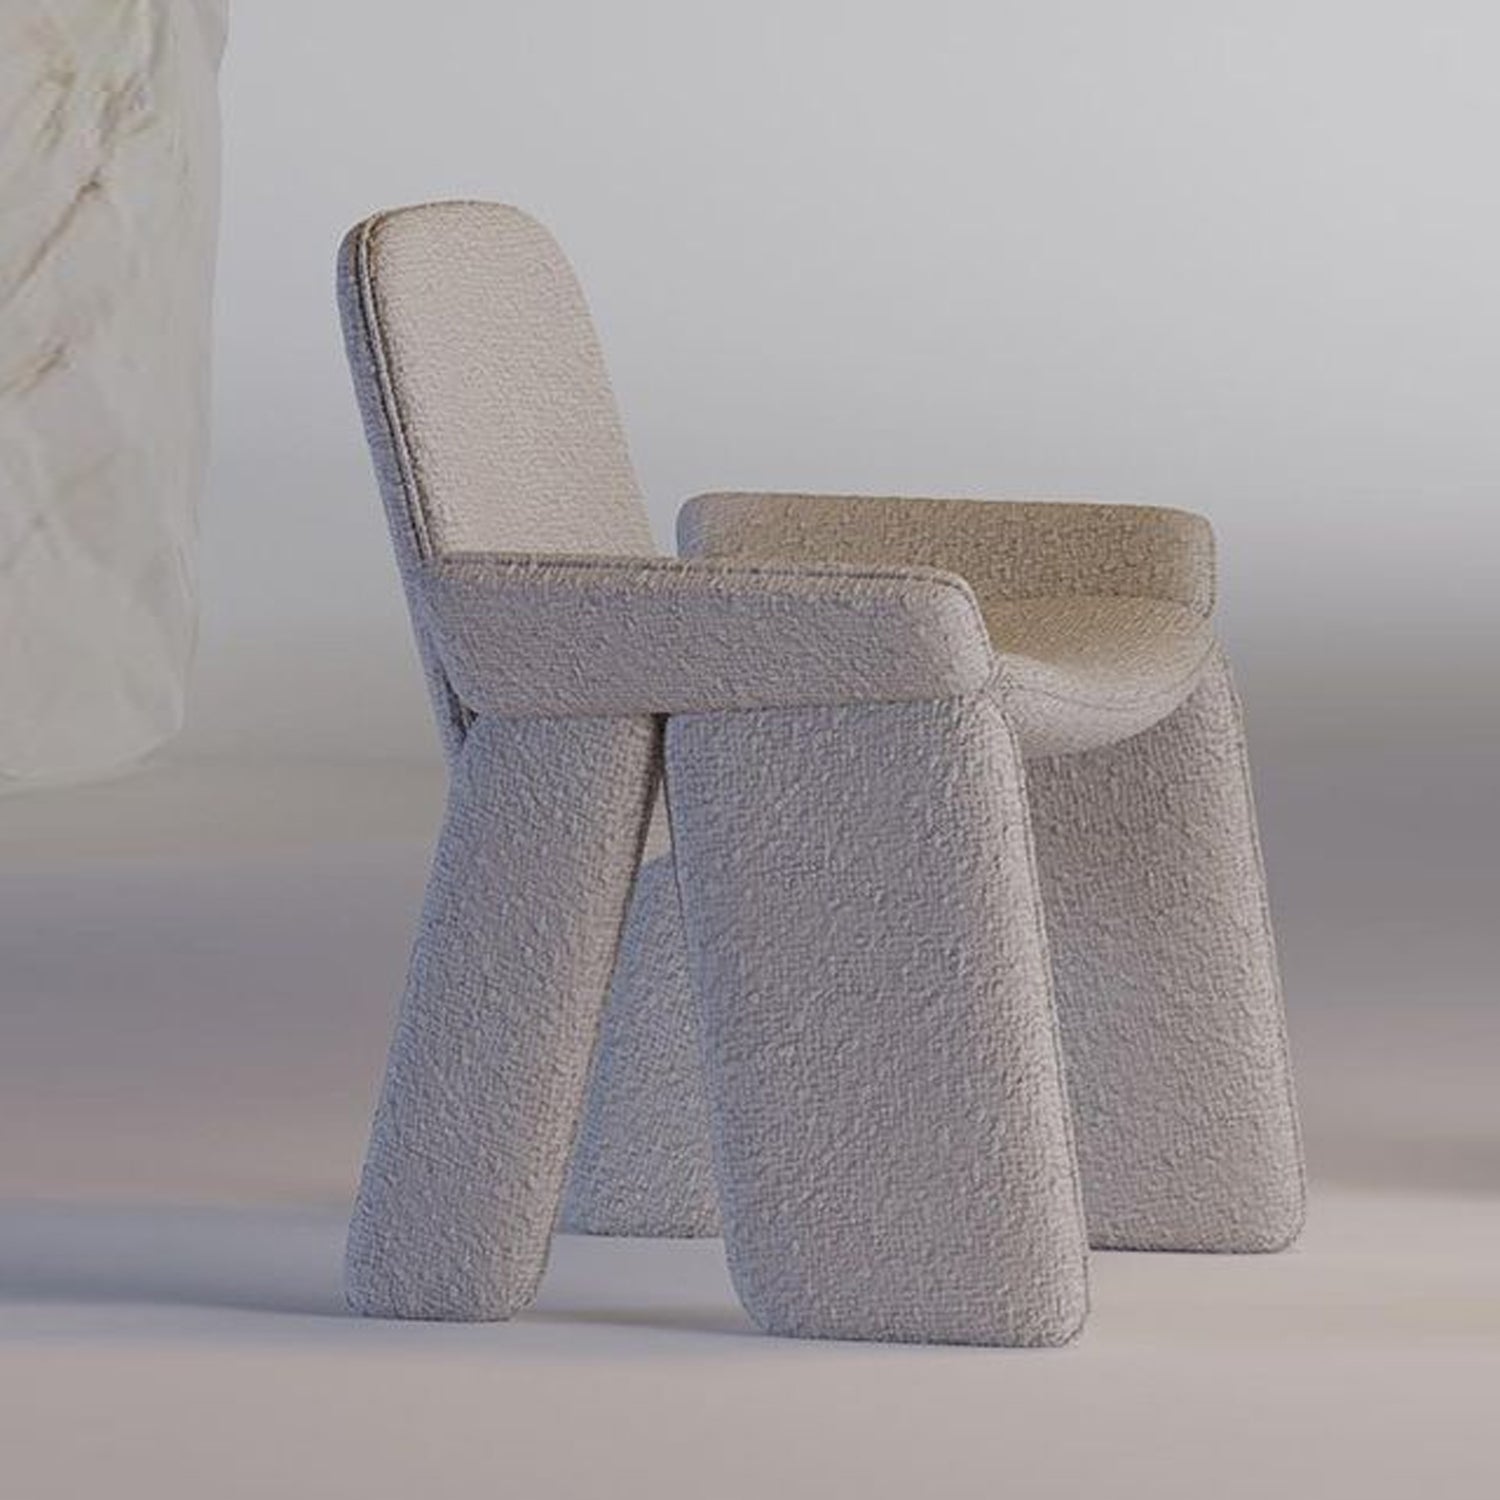 Lounge chair CUT - UKRAINIAN PRODUCT DESIGN